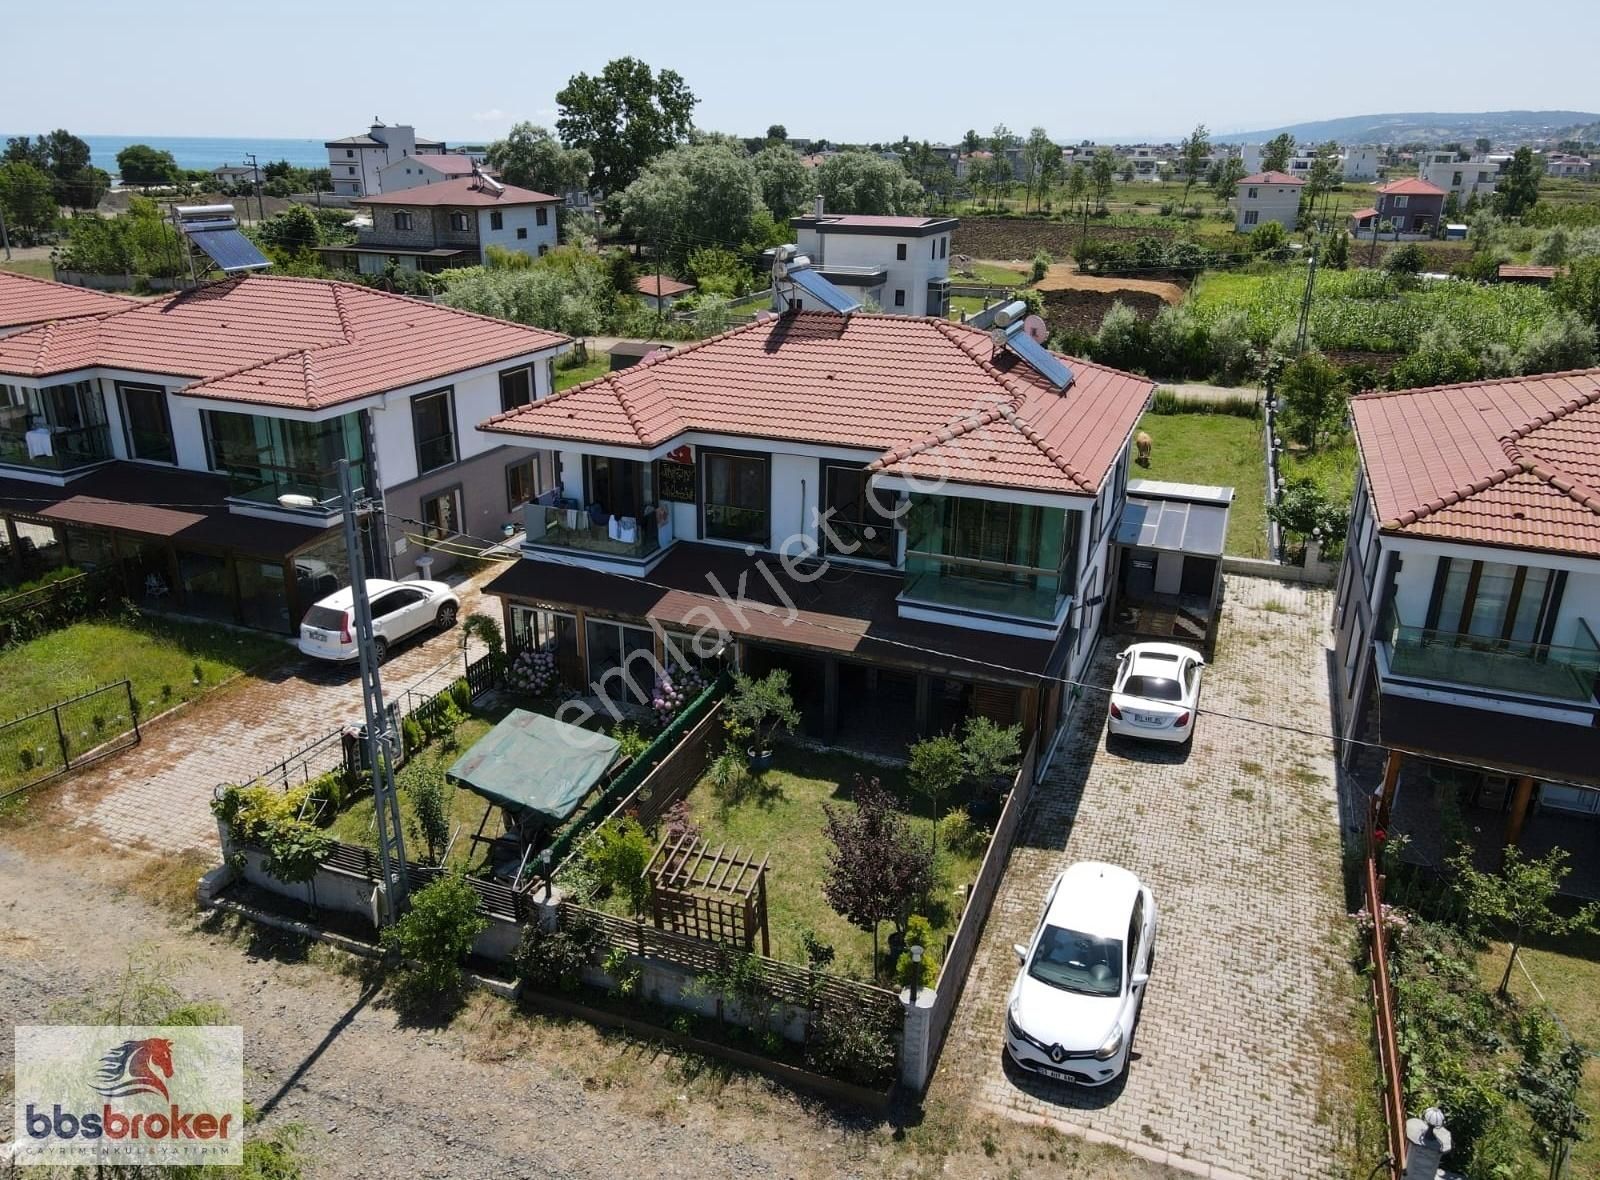 19 Mayıs Dereköy Satılık Villa BBSBROKER'dan Dereköy Sahilde Şaşırtan FIRSAT! 3+1 EŞYALI Dubleks Villa